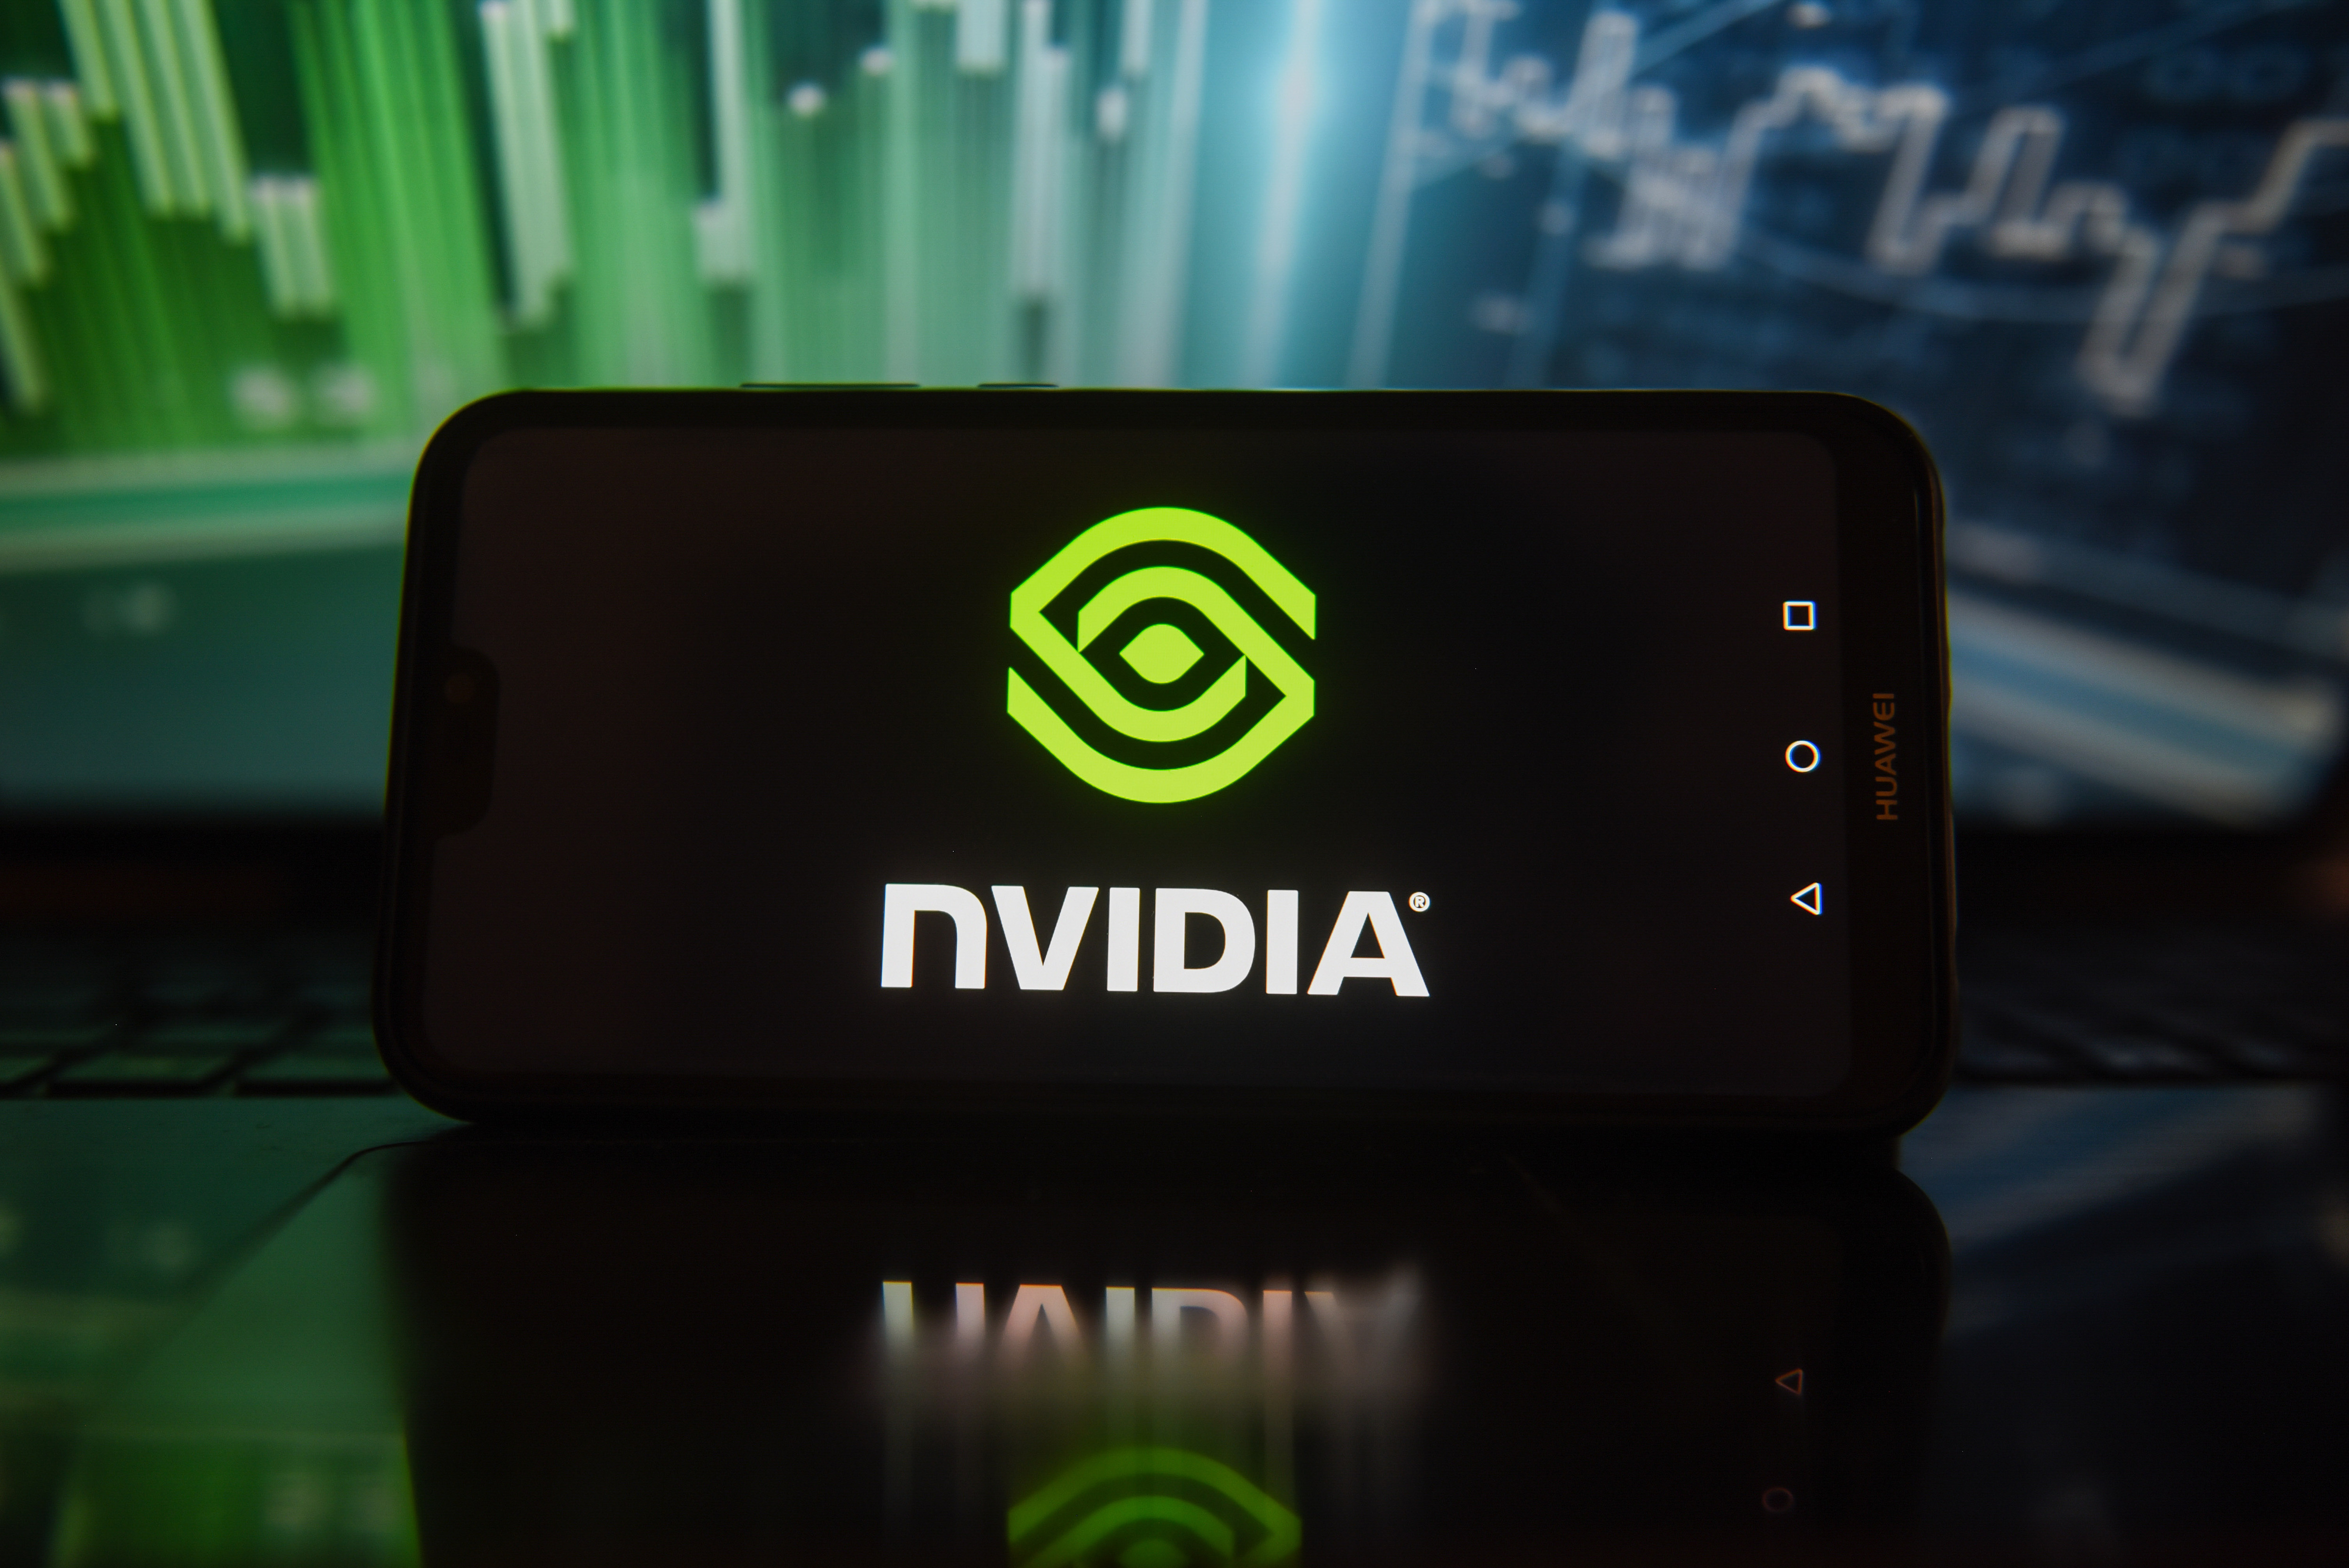 The Nvidia logo on a smartphone screen